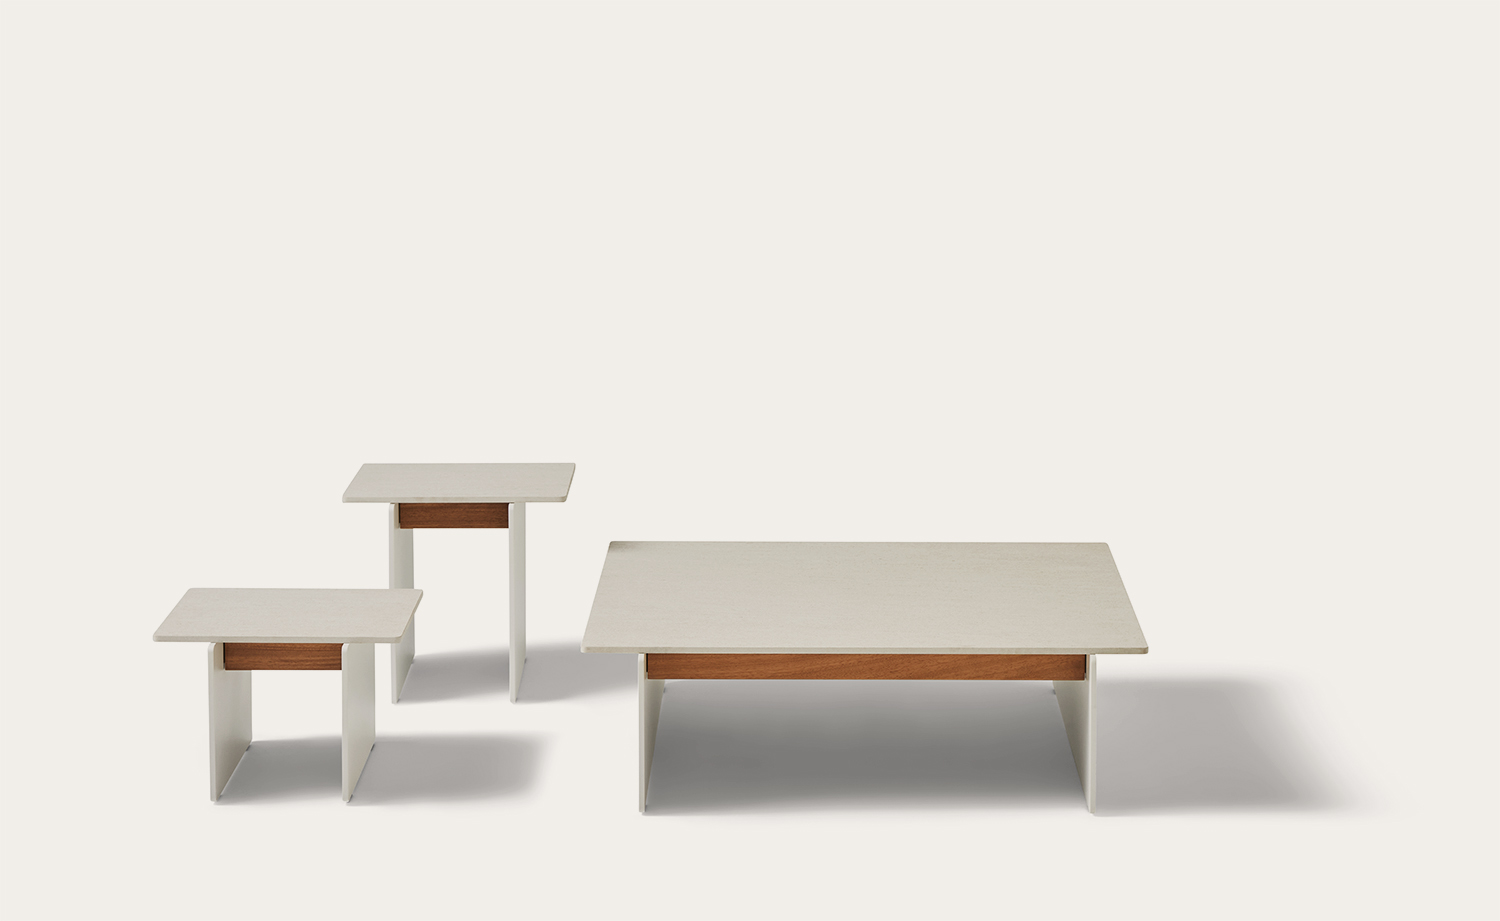 Axis Outdoor table collection by Mario Ruiz for Joquer